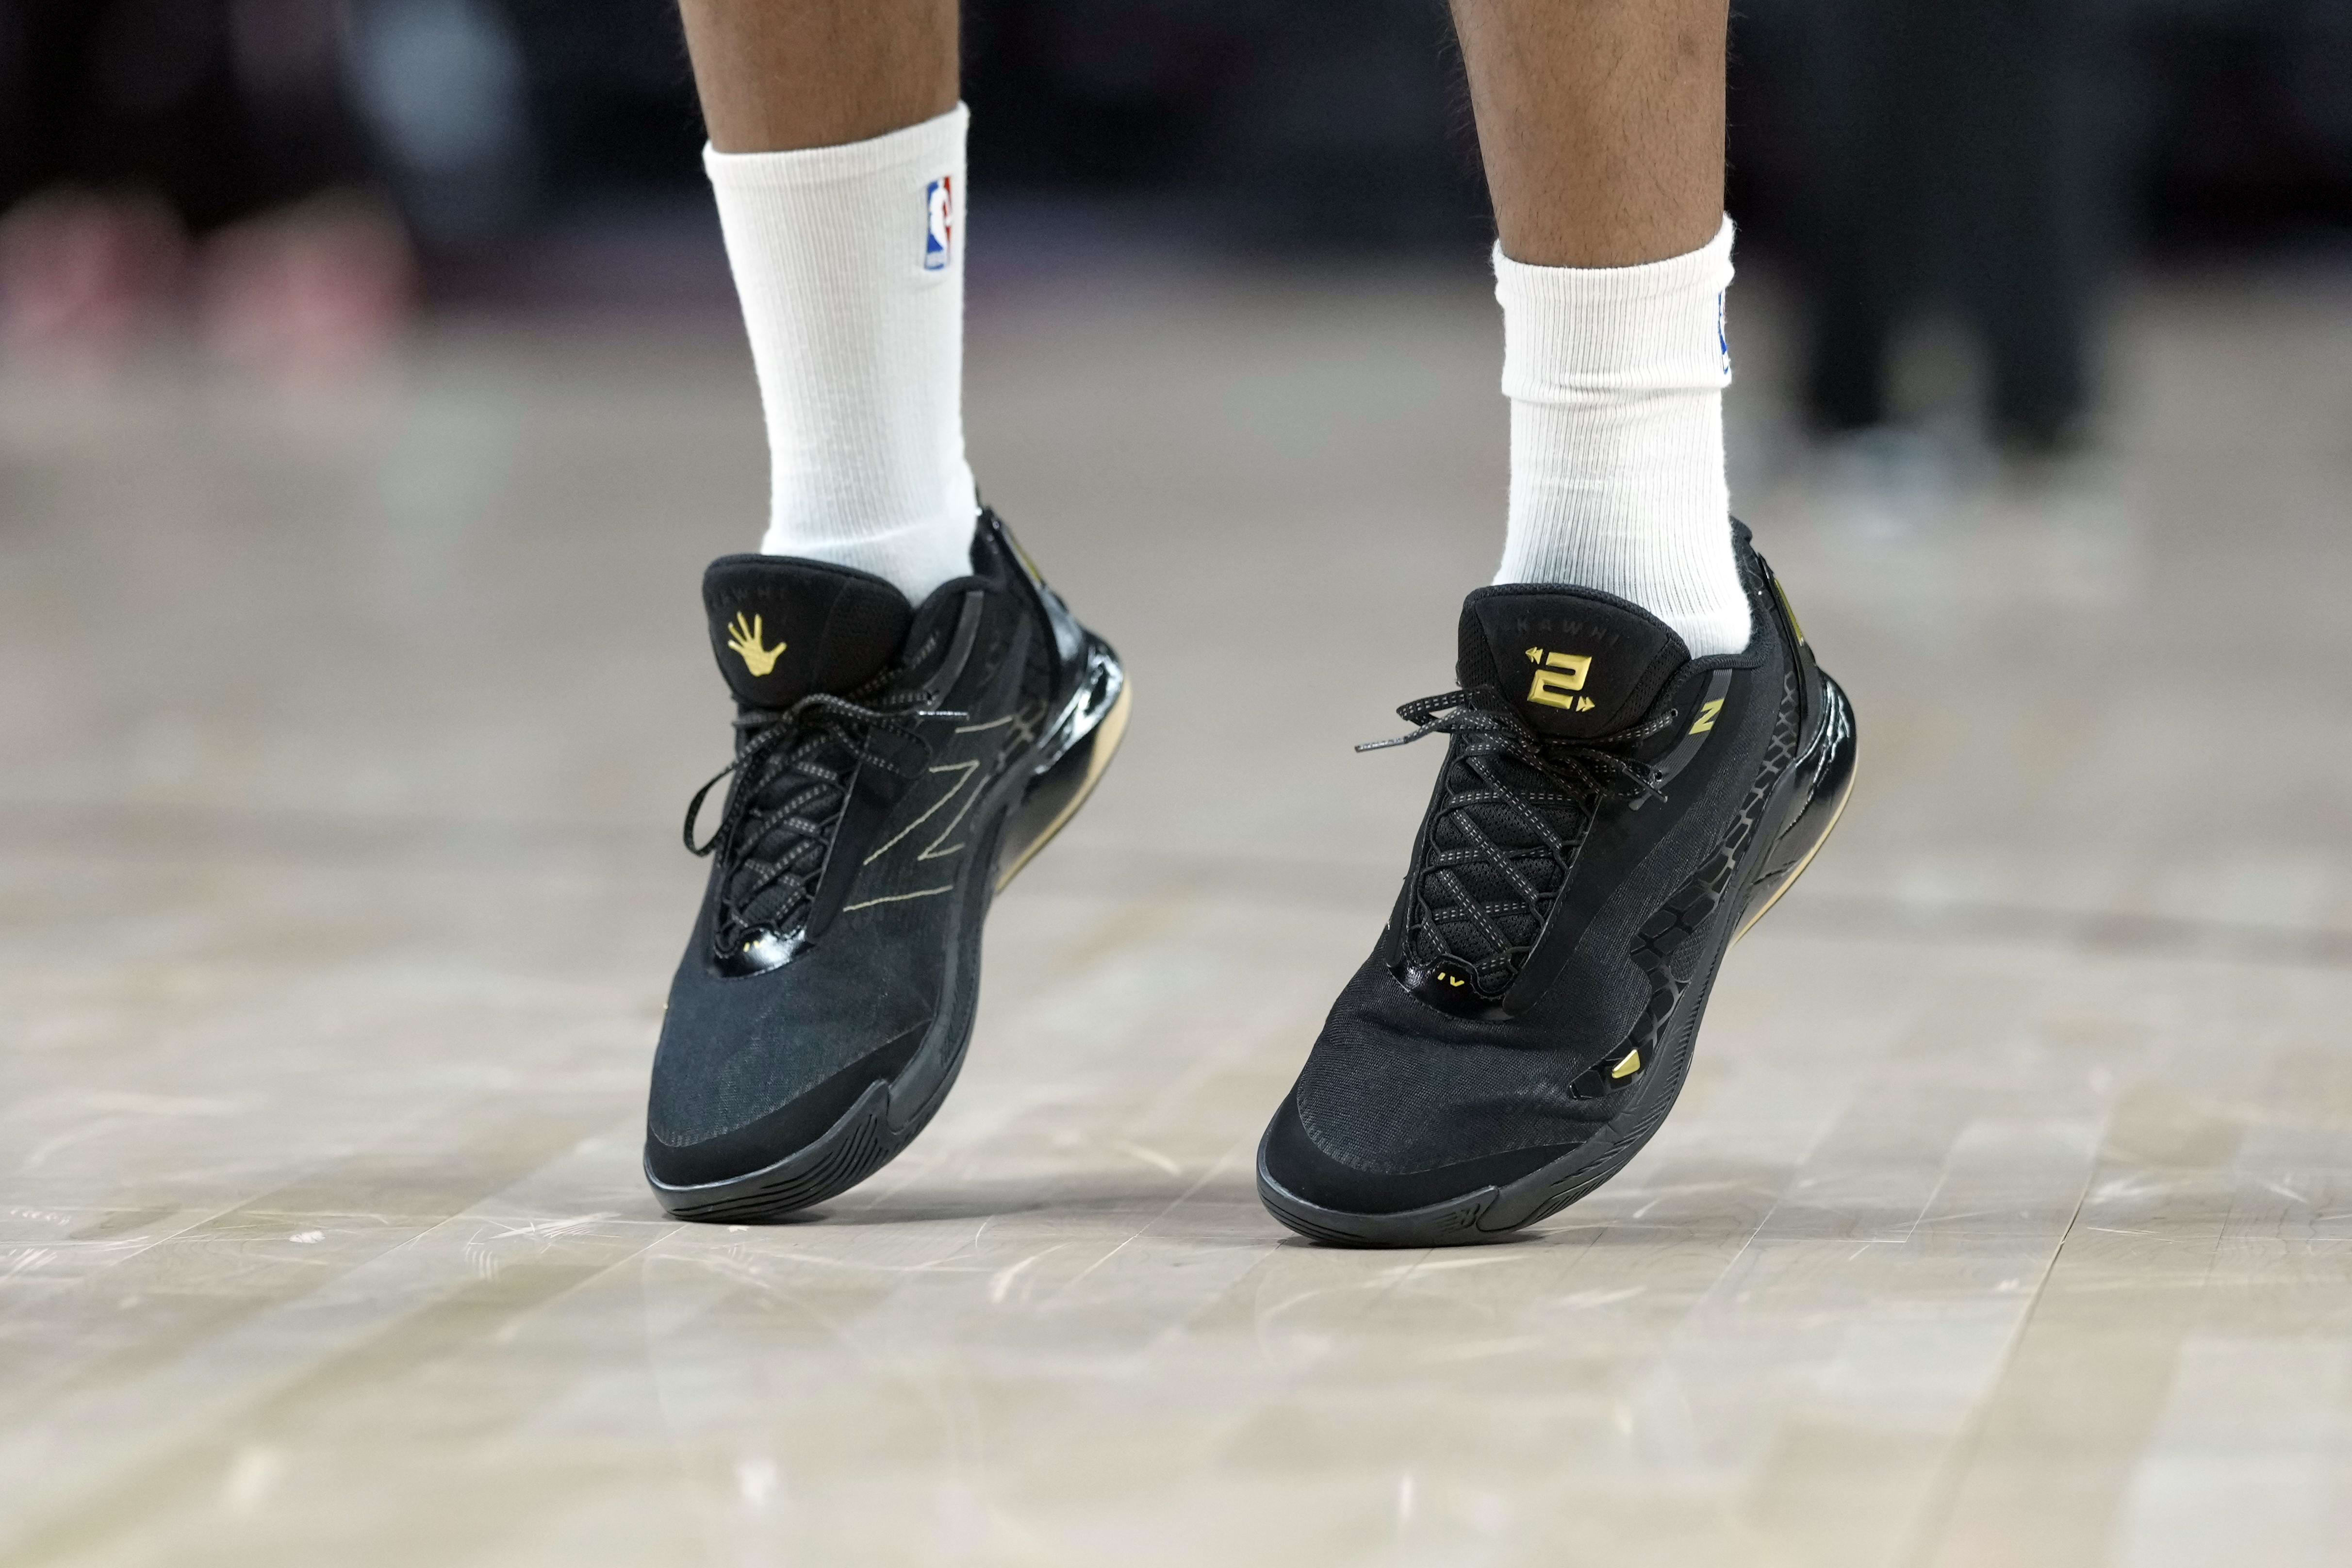 Kawhi Leonard's black and gold New Balance sneakers.